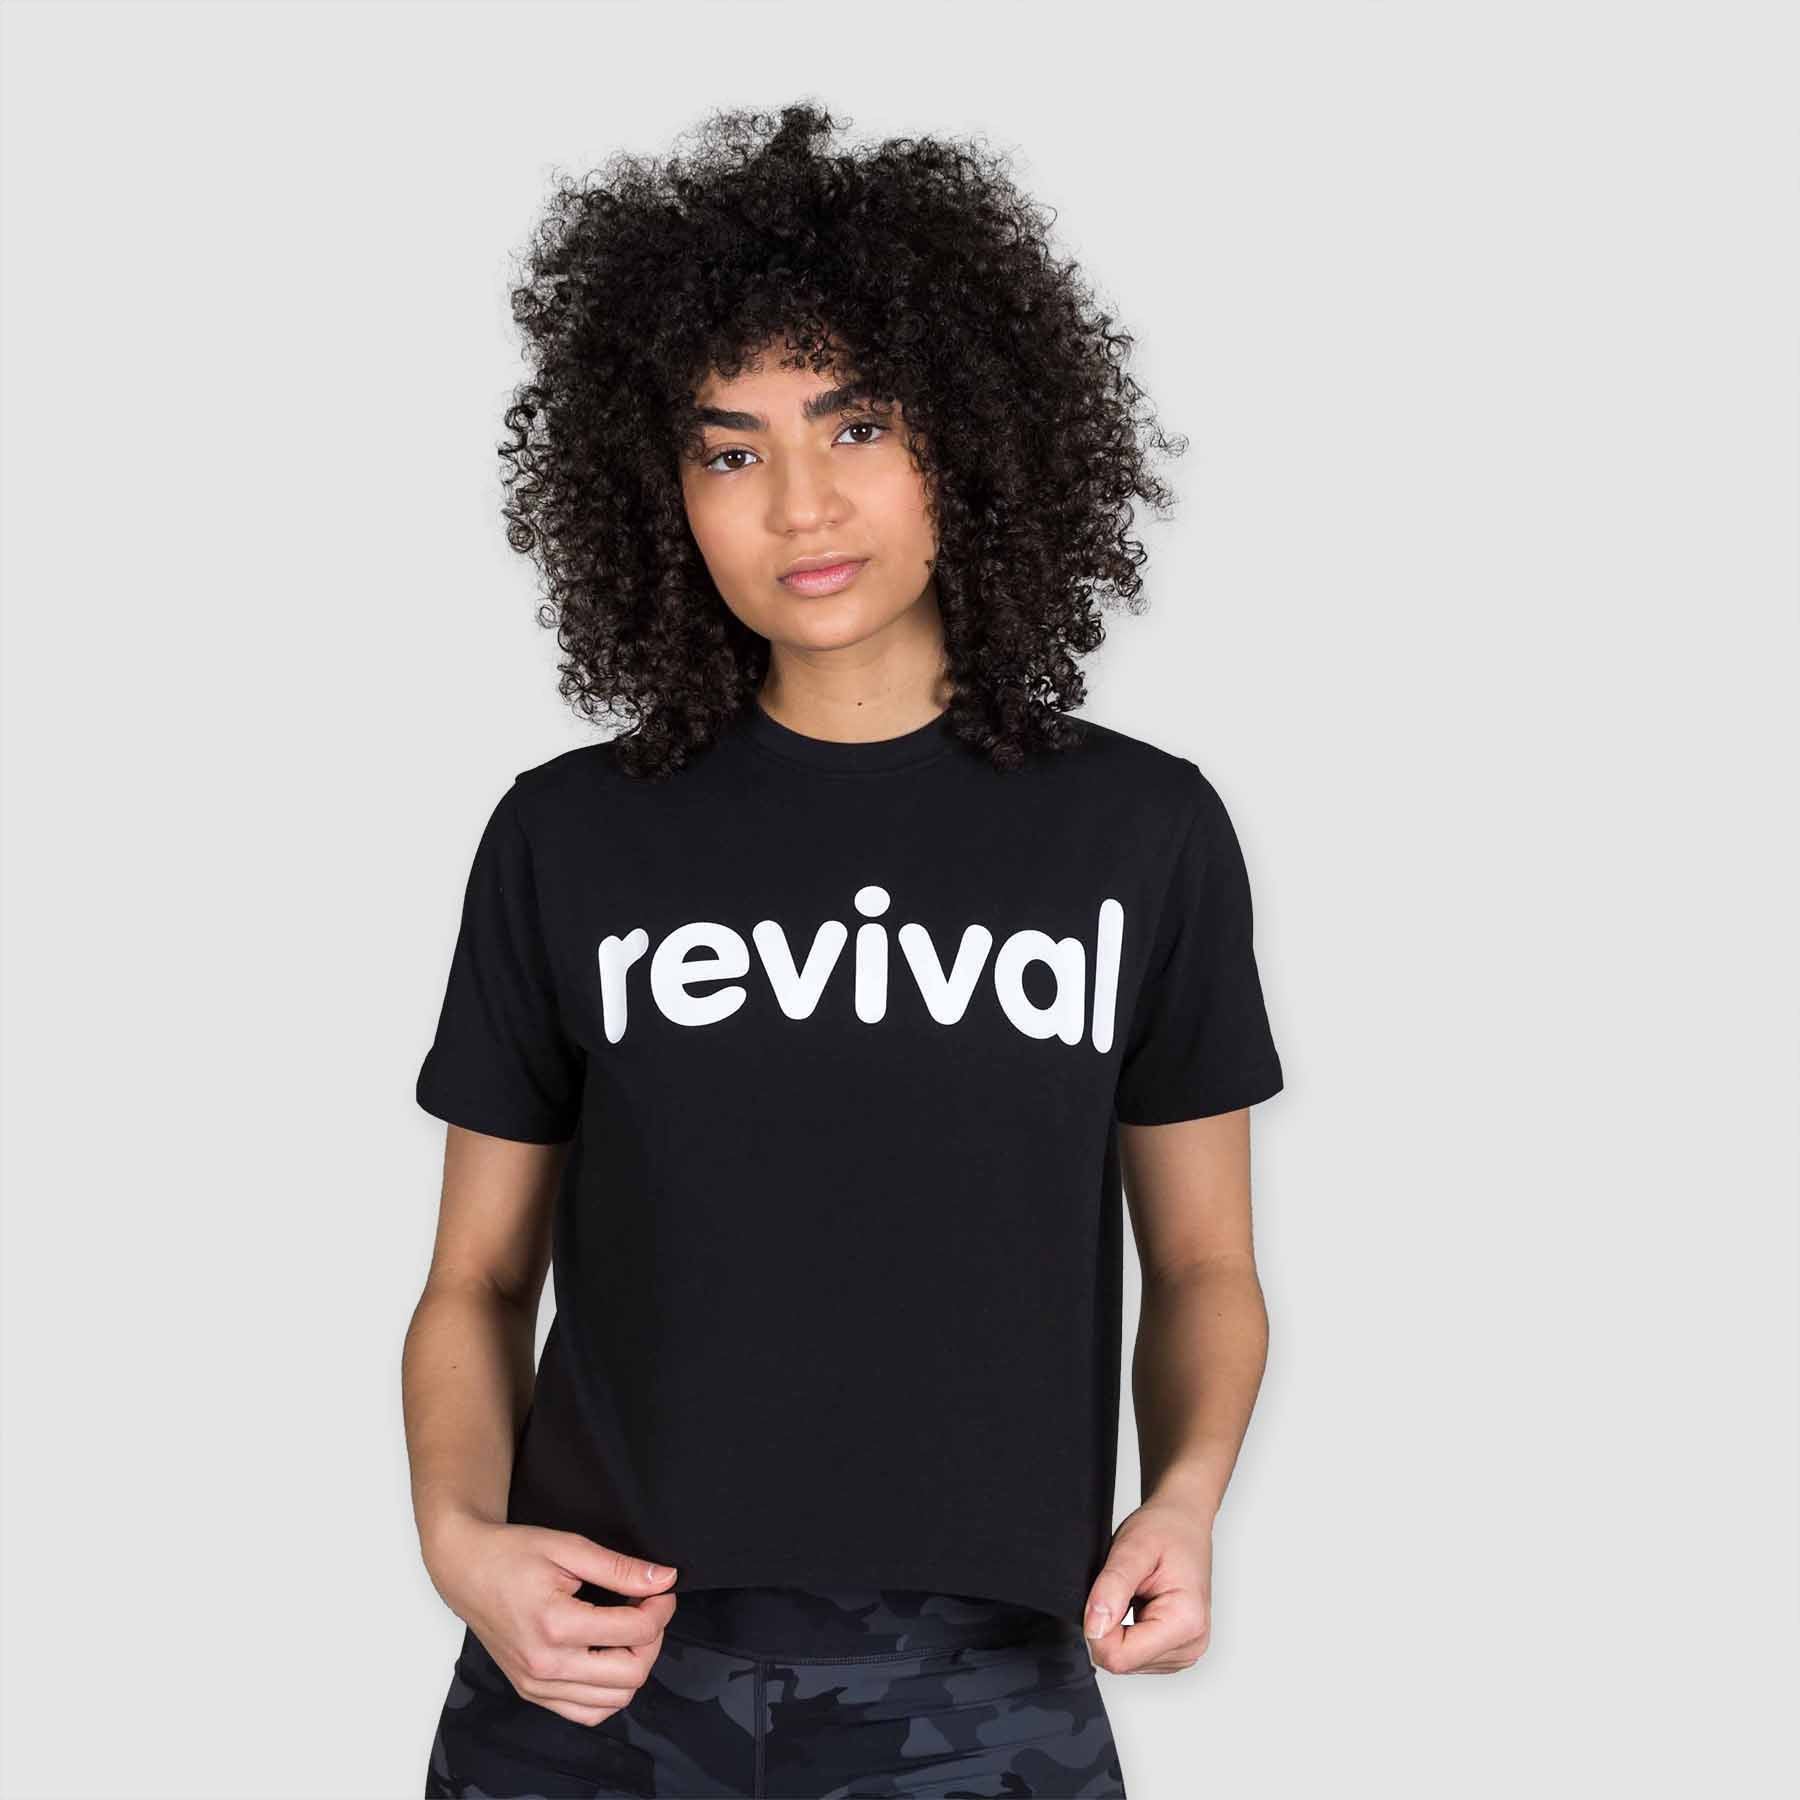 Revival - Essential Ladies Cropped T-Shirt - Black/White